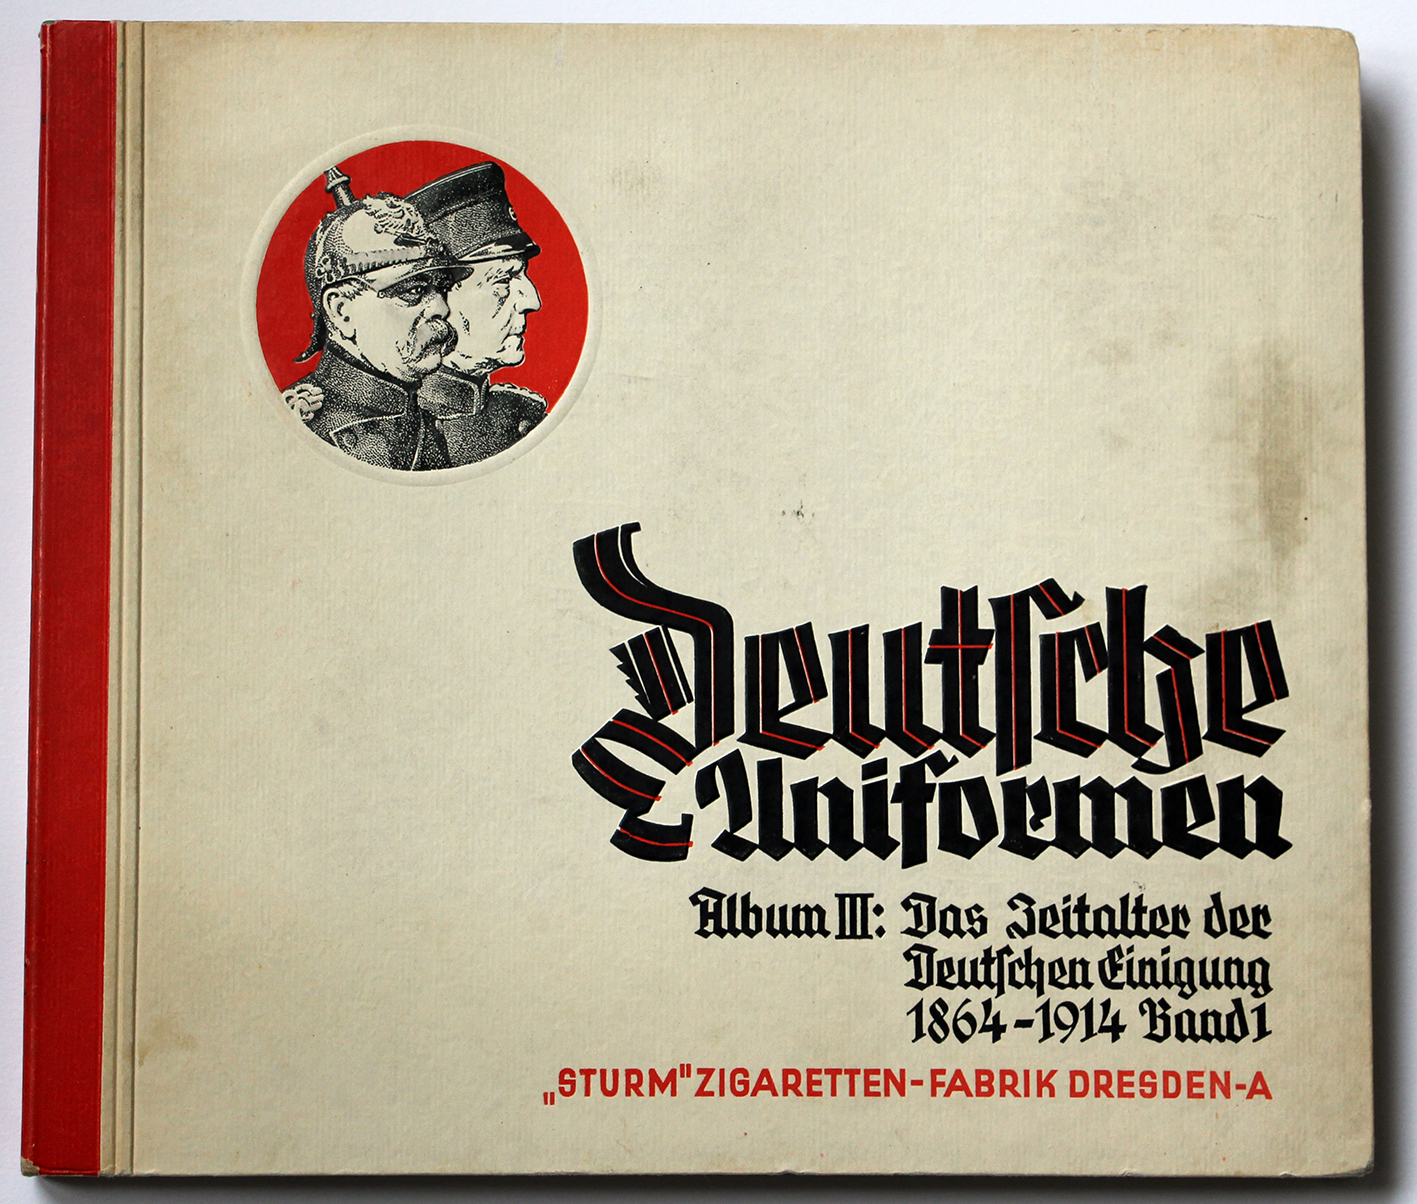 Deutsche Uniformen - Sturm Zigaretten - Album III